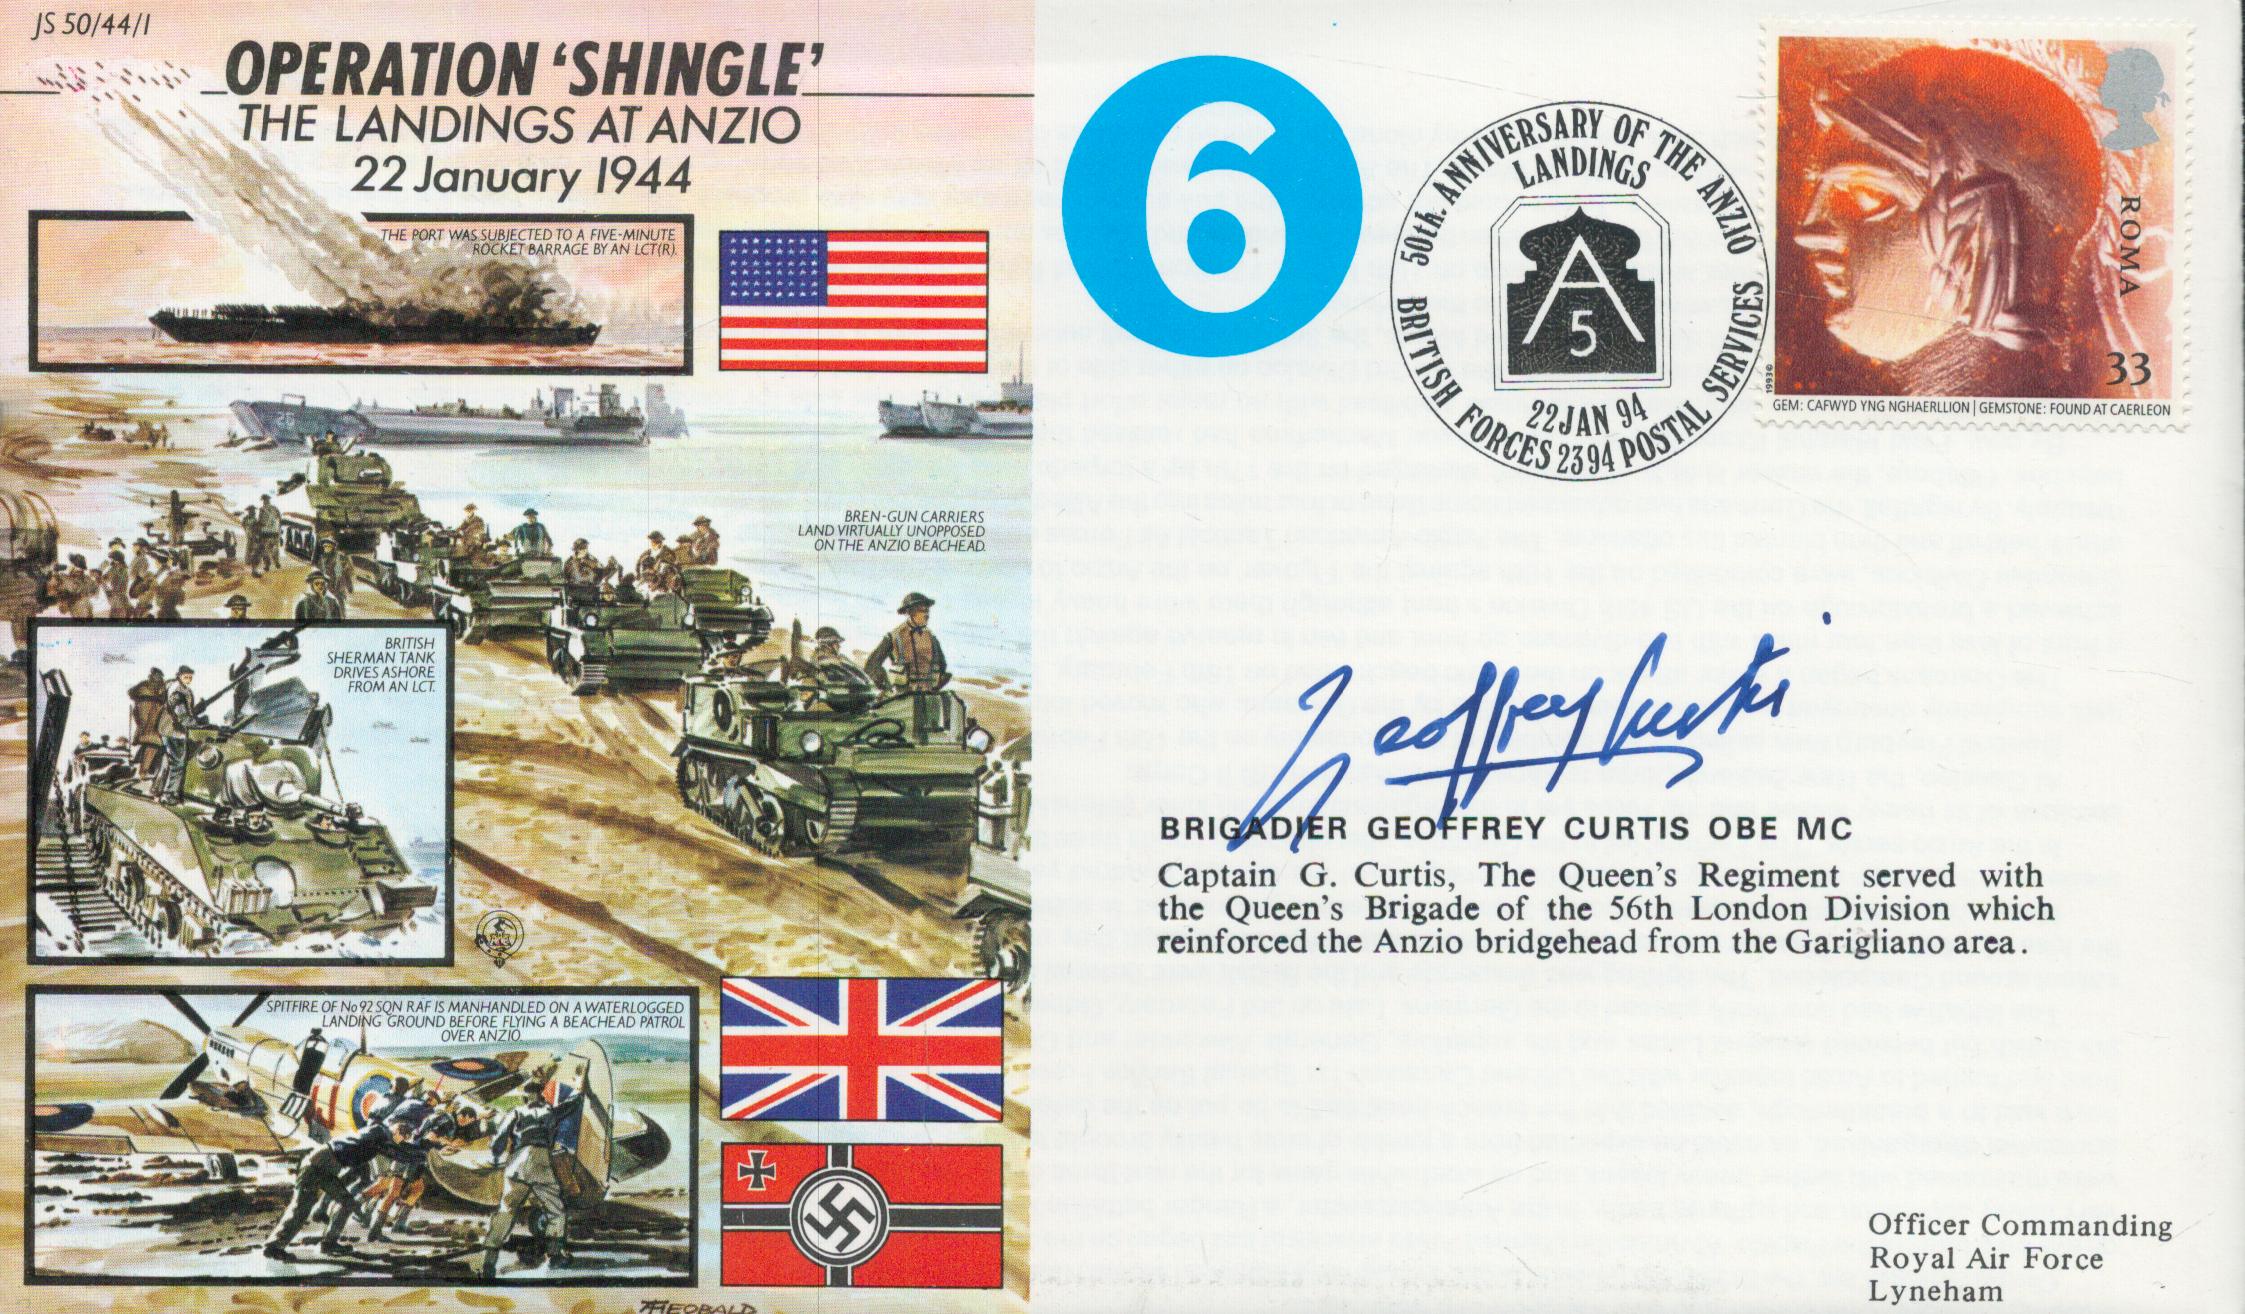 Brig Geoffrey Curtis OBE MC signed 50th ann WW2 cover Operation Shingle Landings at Anzio JS50/44/1.